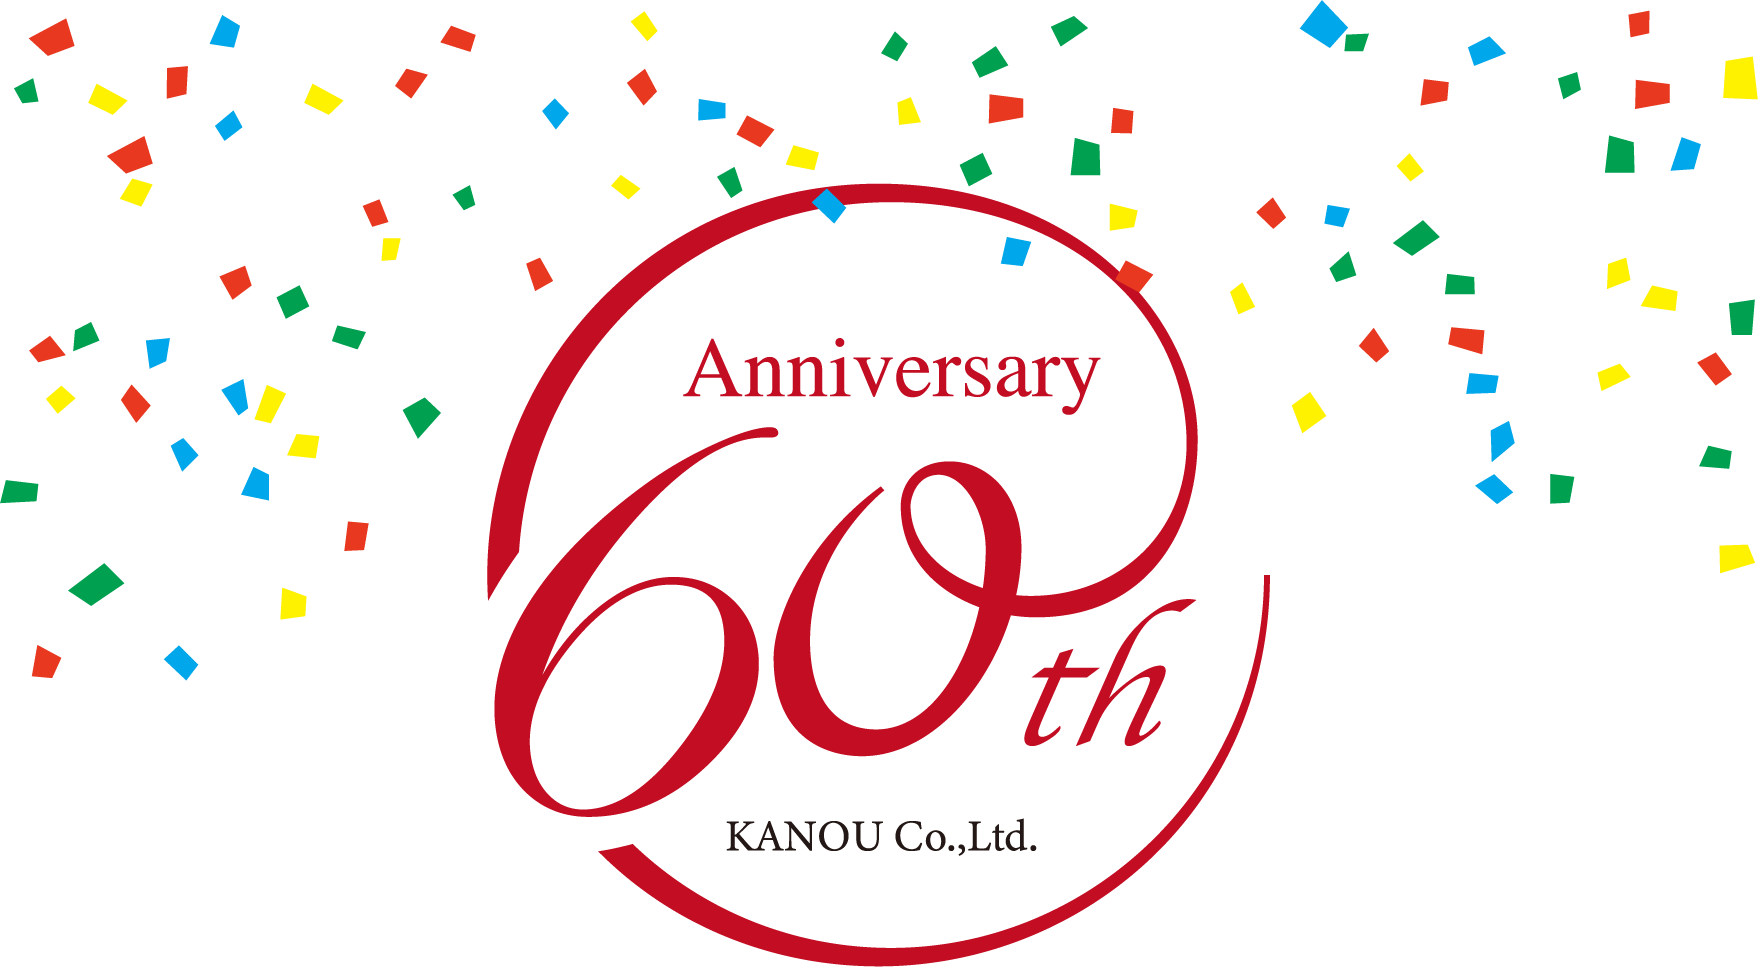 Anniversary 60th KANOU Co.,Ltd.